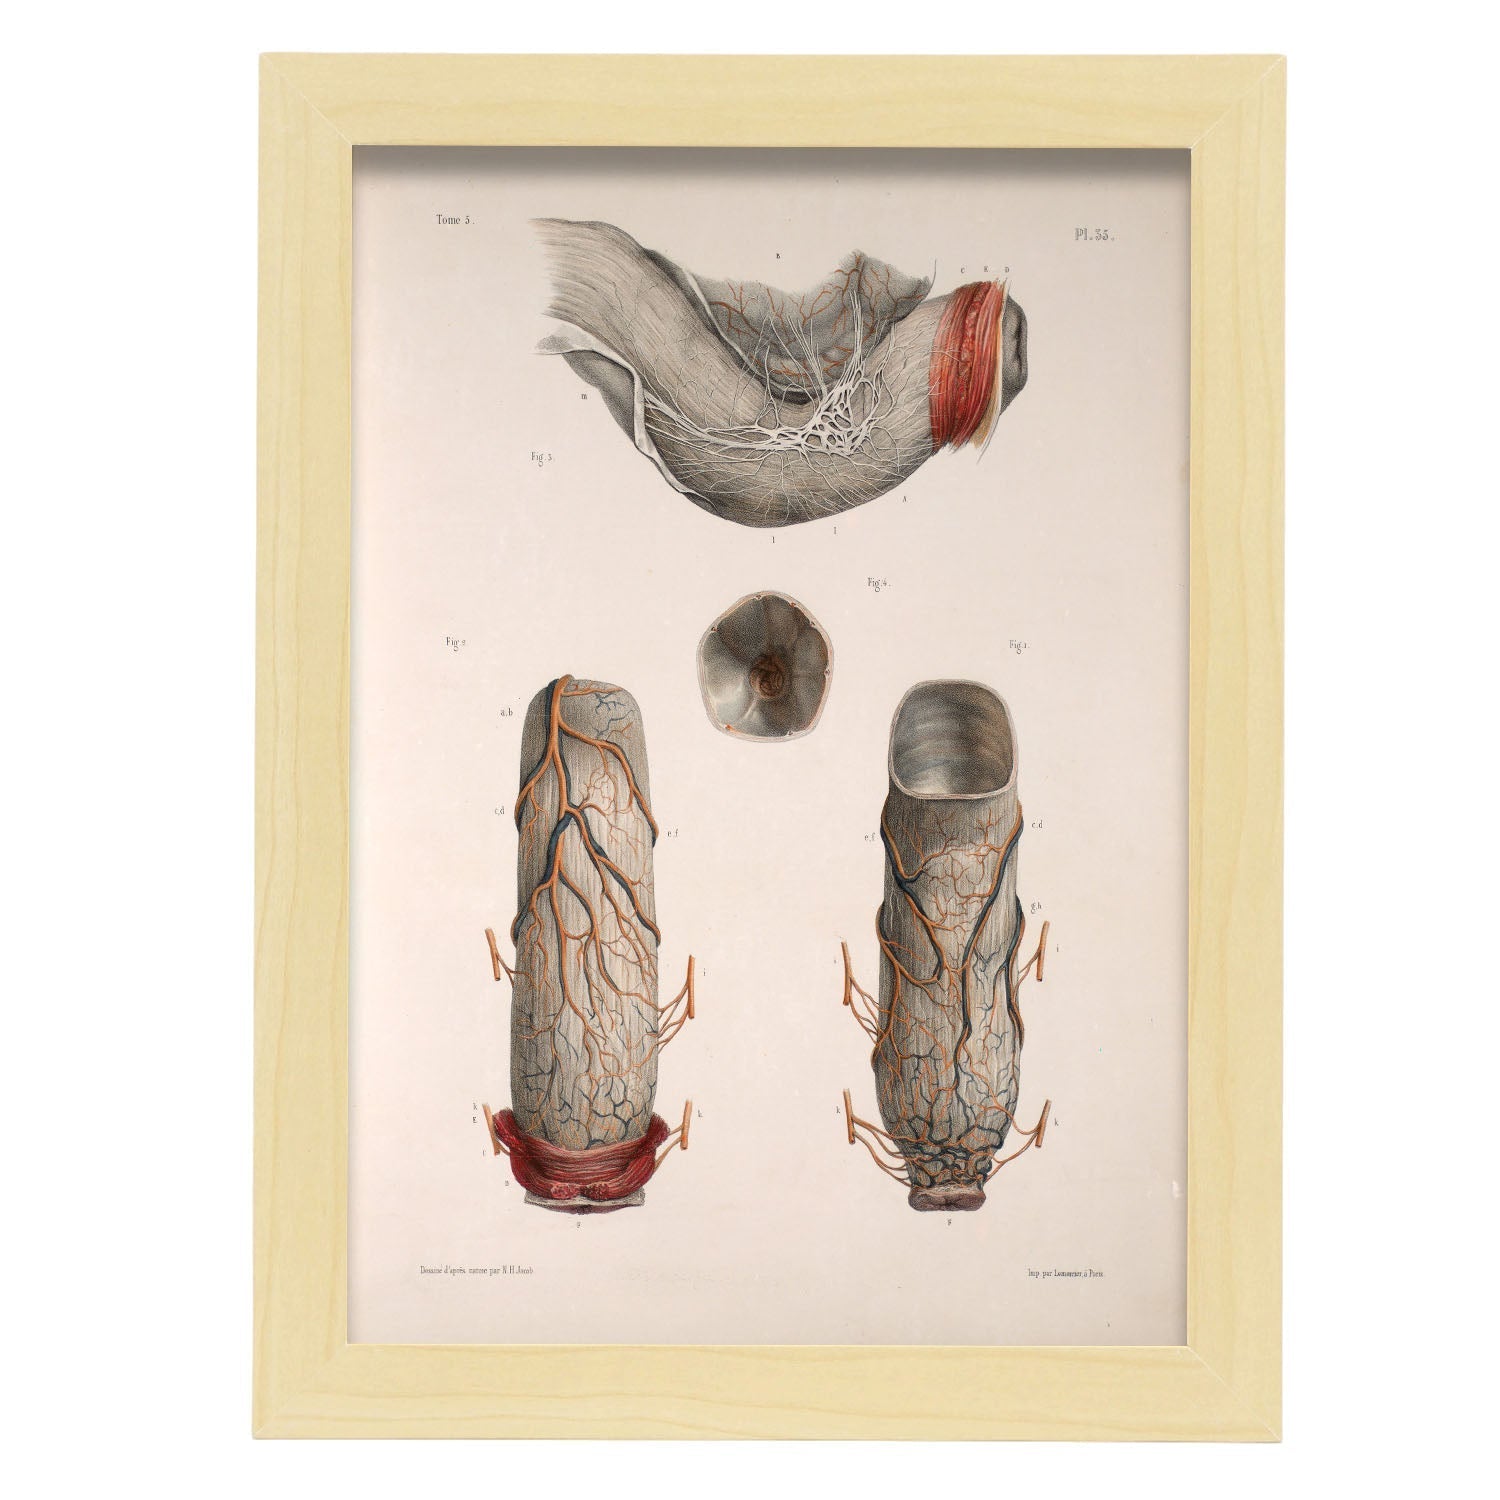 Large intestine, rectum and anus-Artwork-Nacnic-A4-Marco Madera clara-Nacnic Estudio SL